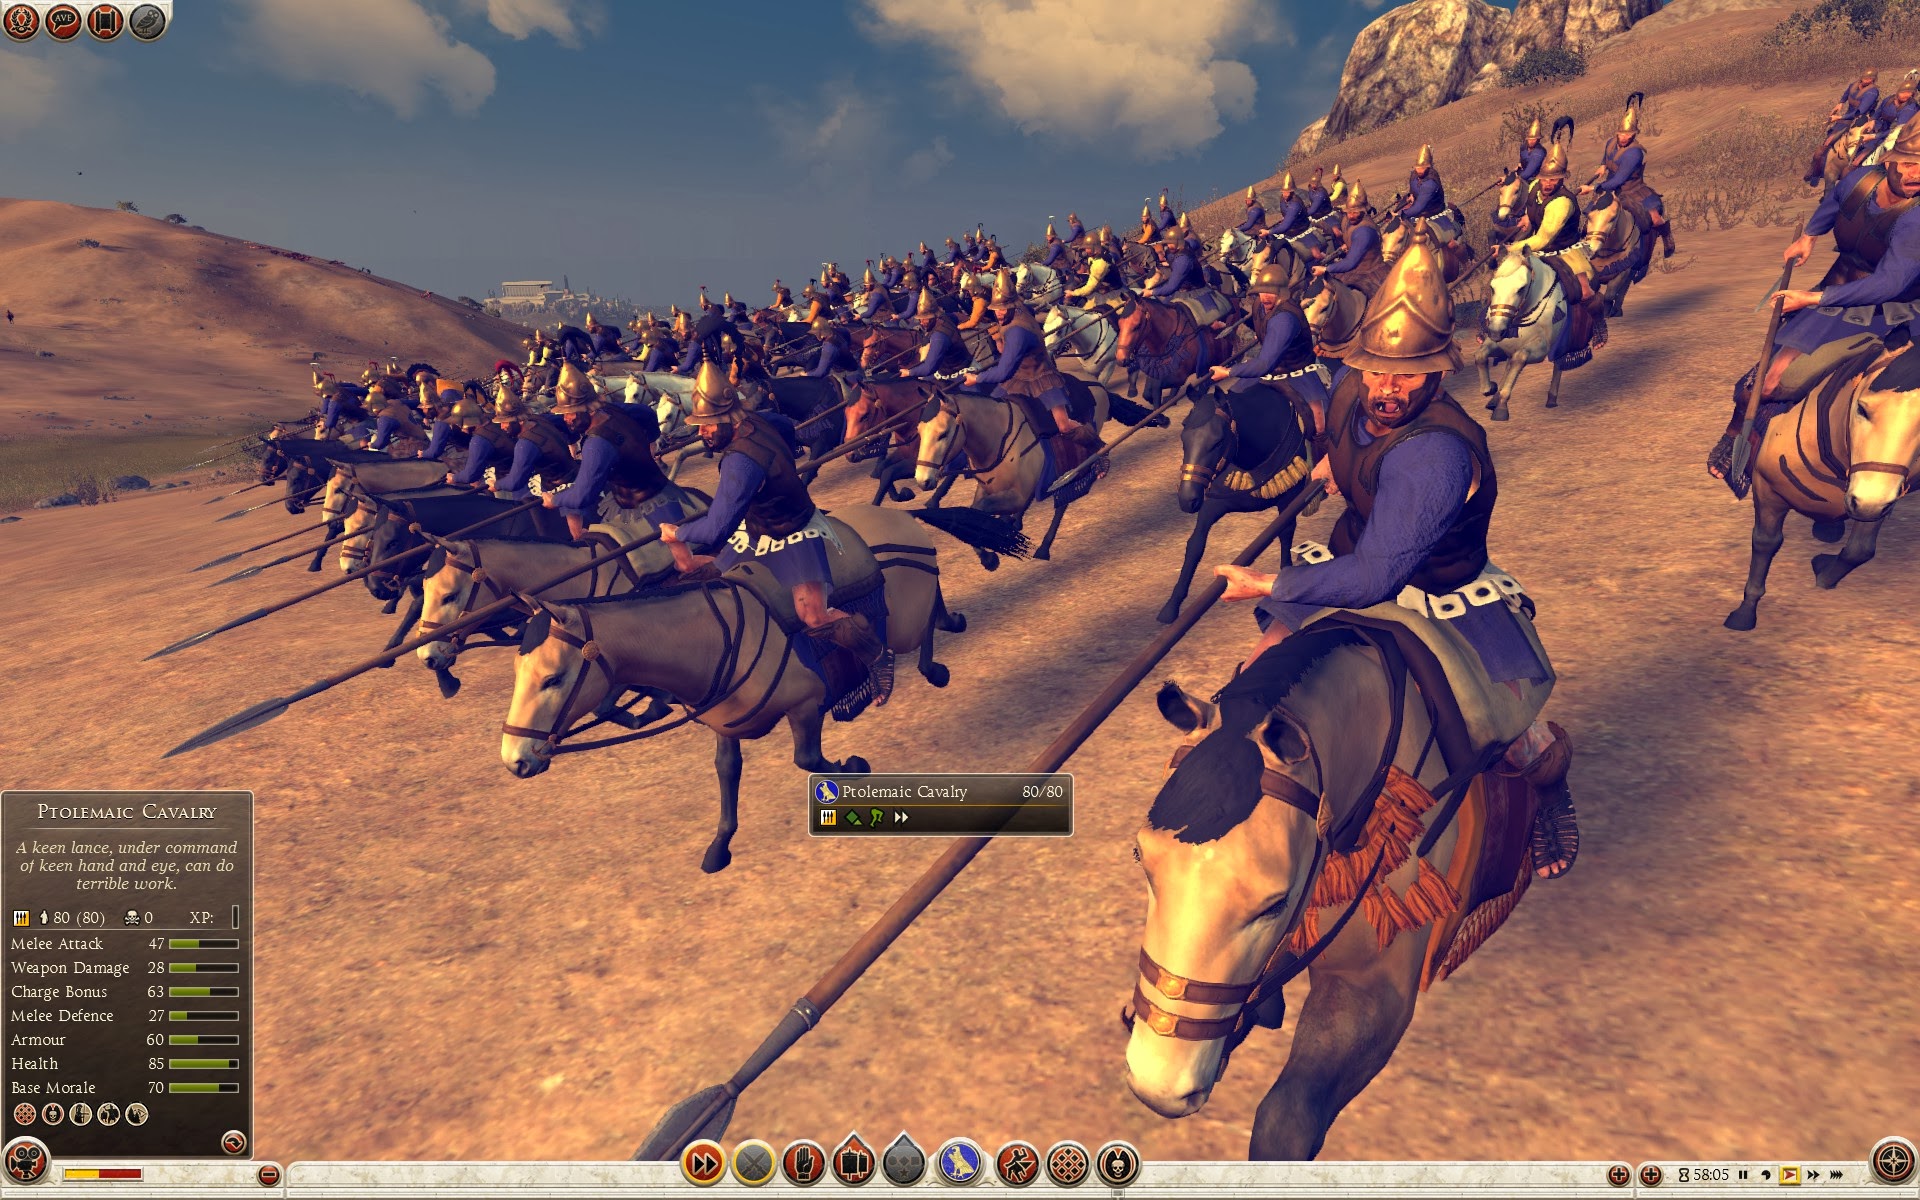 Ptolemaic Cavalry